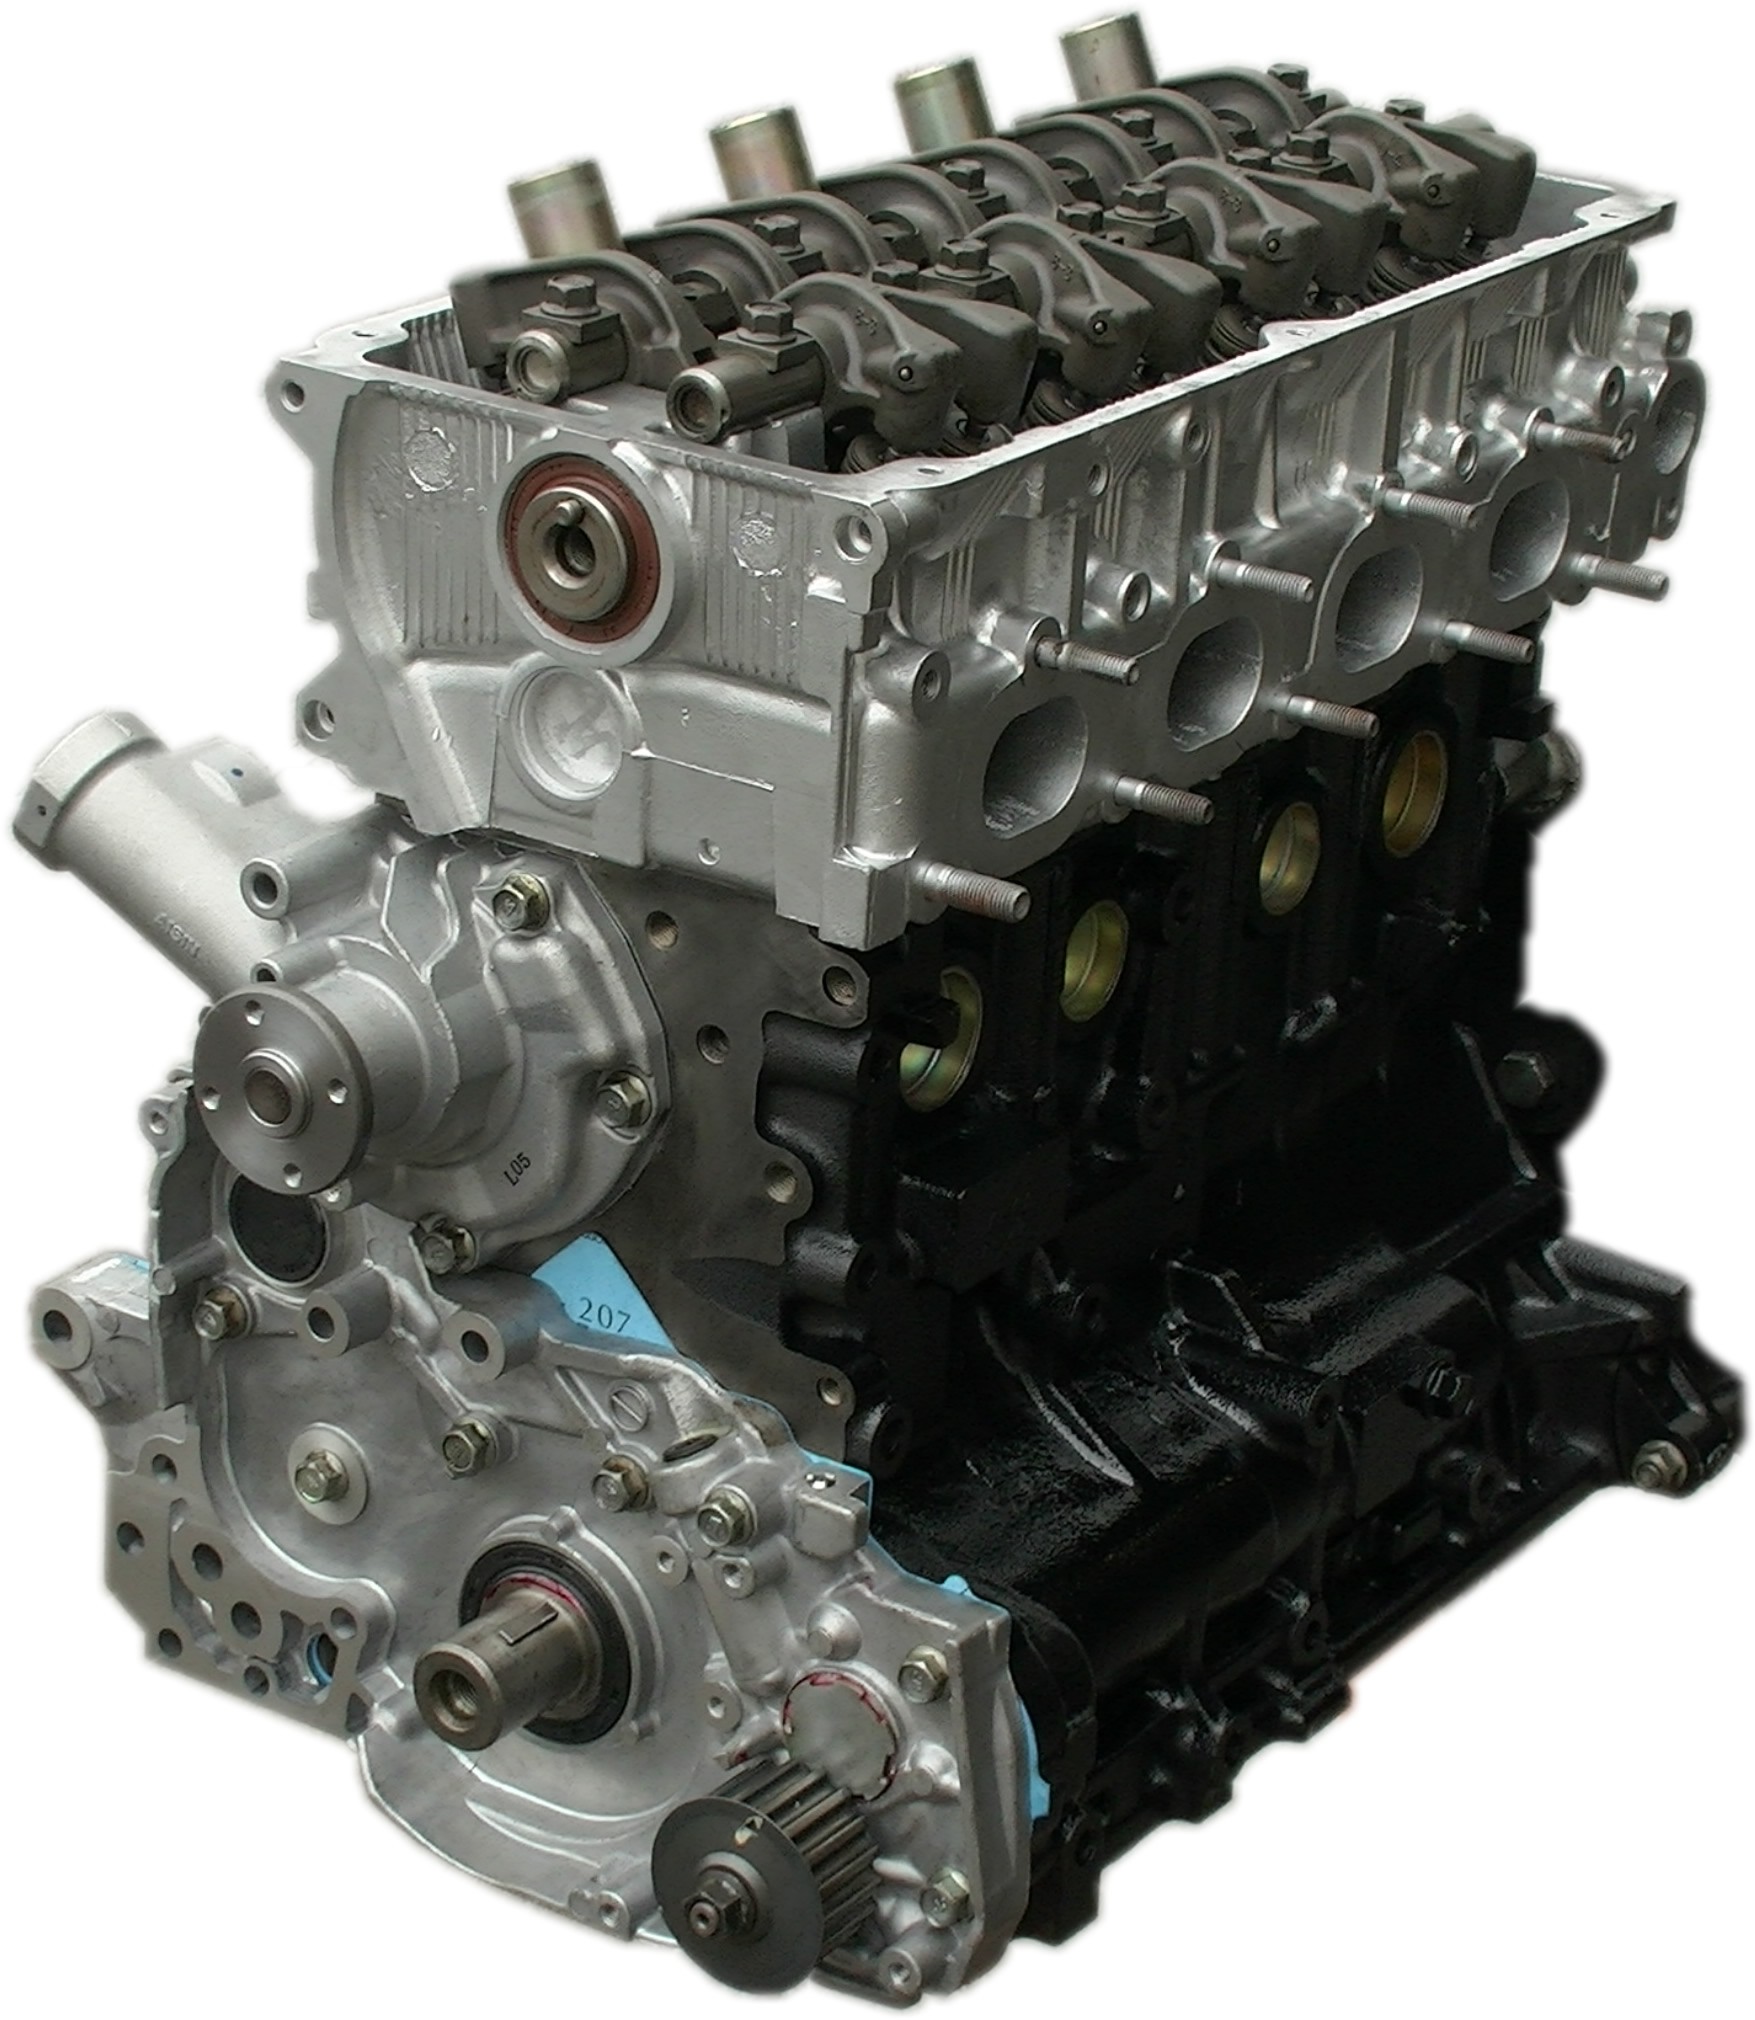 Rebuilt 0105 Dodge Stratus Coupe 2.4L 4G64 Engine « Kar